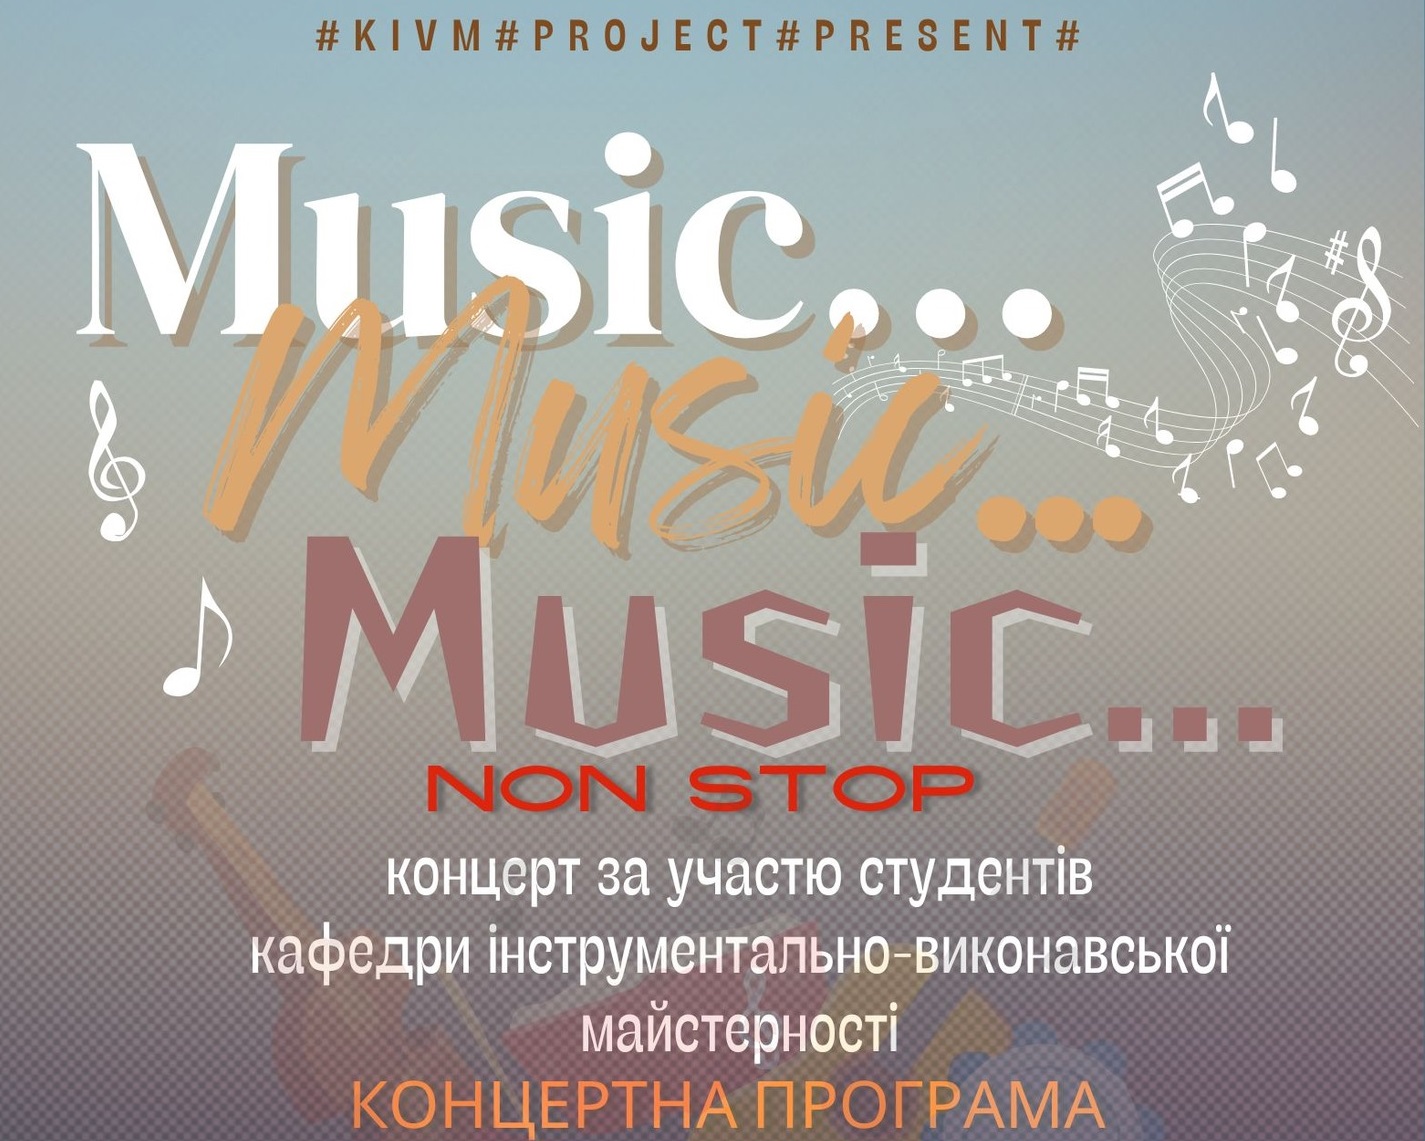 MUSIC…MUSIC…MUSIC… NON STOP 